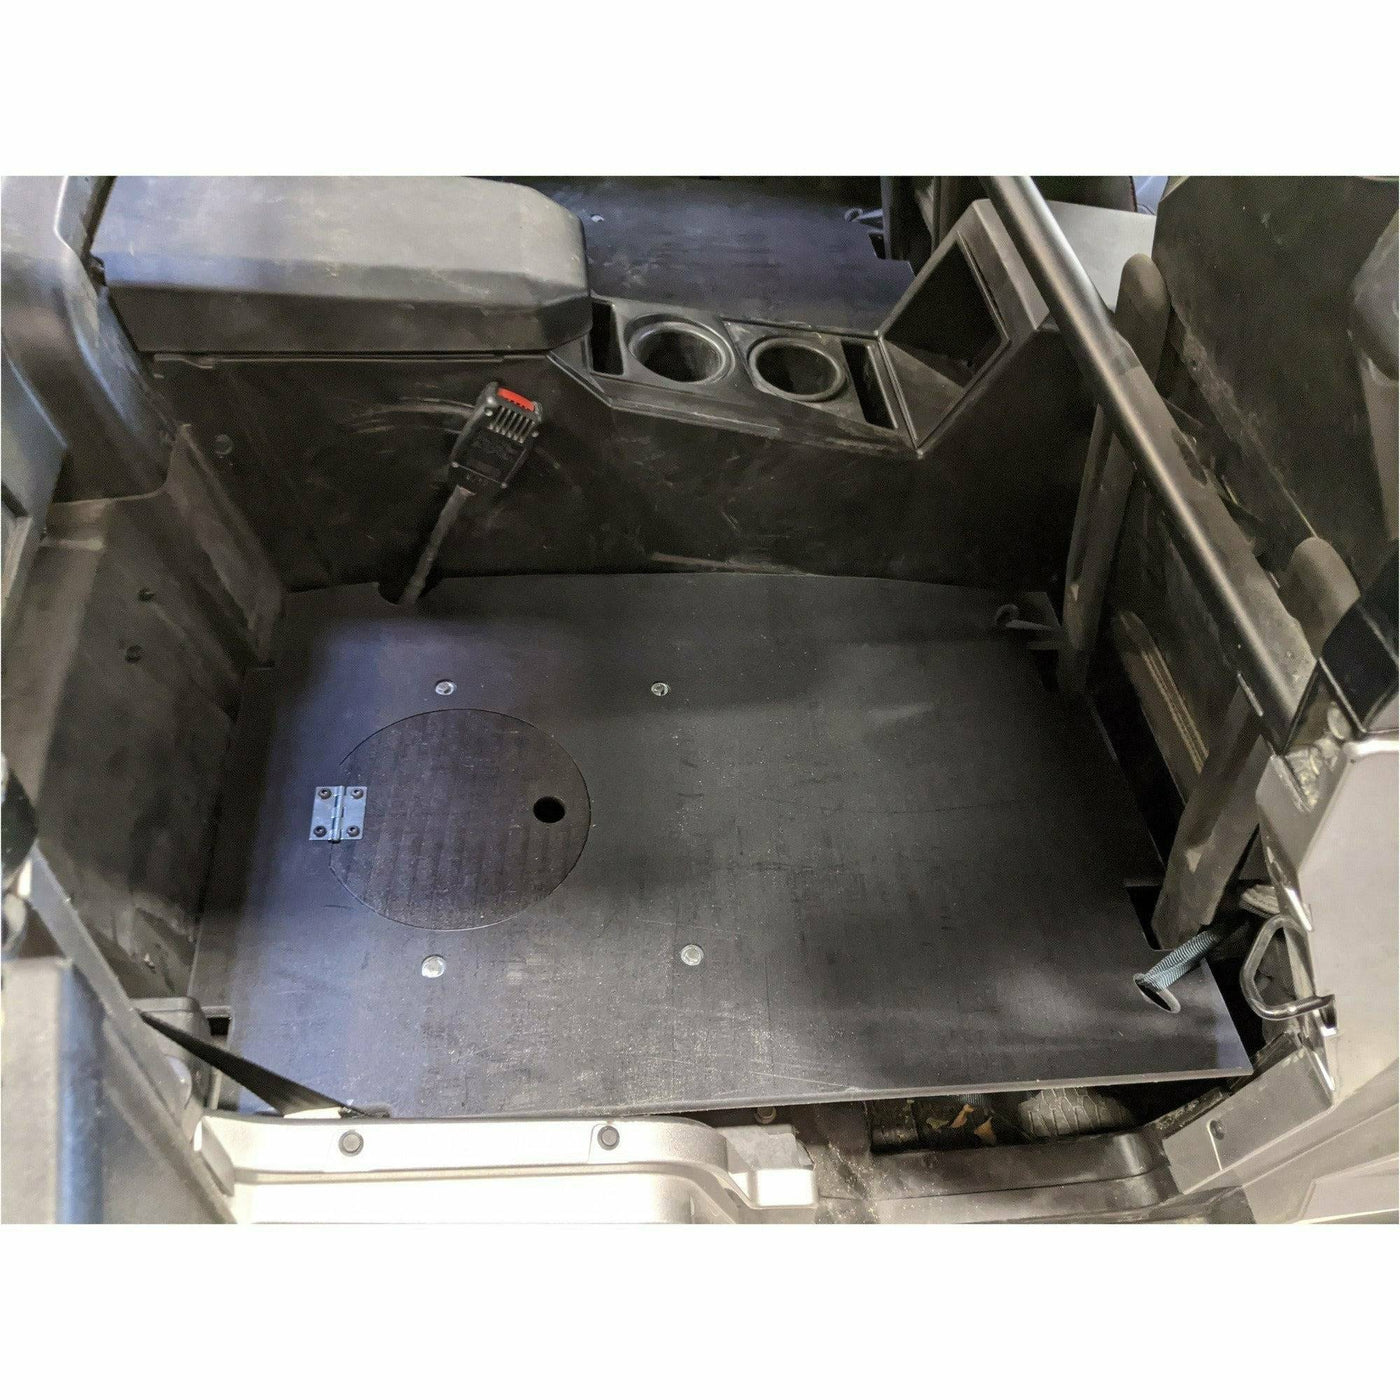 SSS Off-Road Cargo Rack / Dog Seat - Back Seat Conversion Kit for Polaris General XP 4 1000